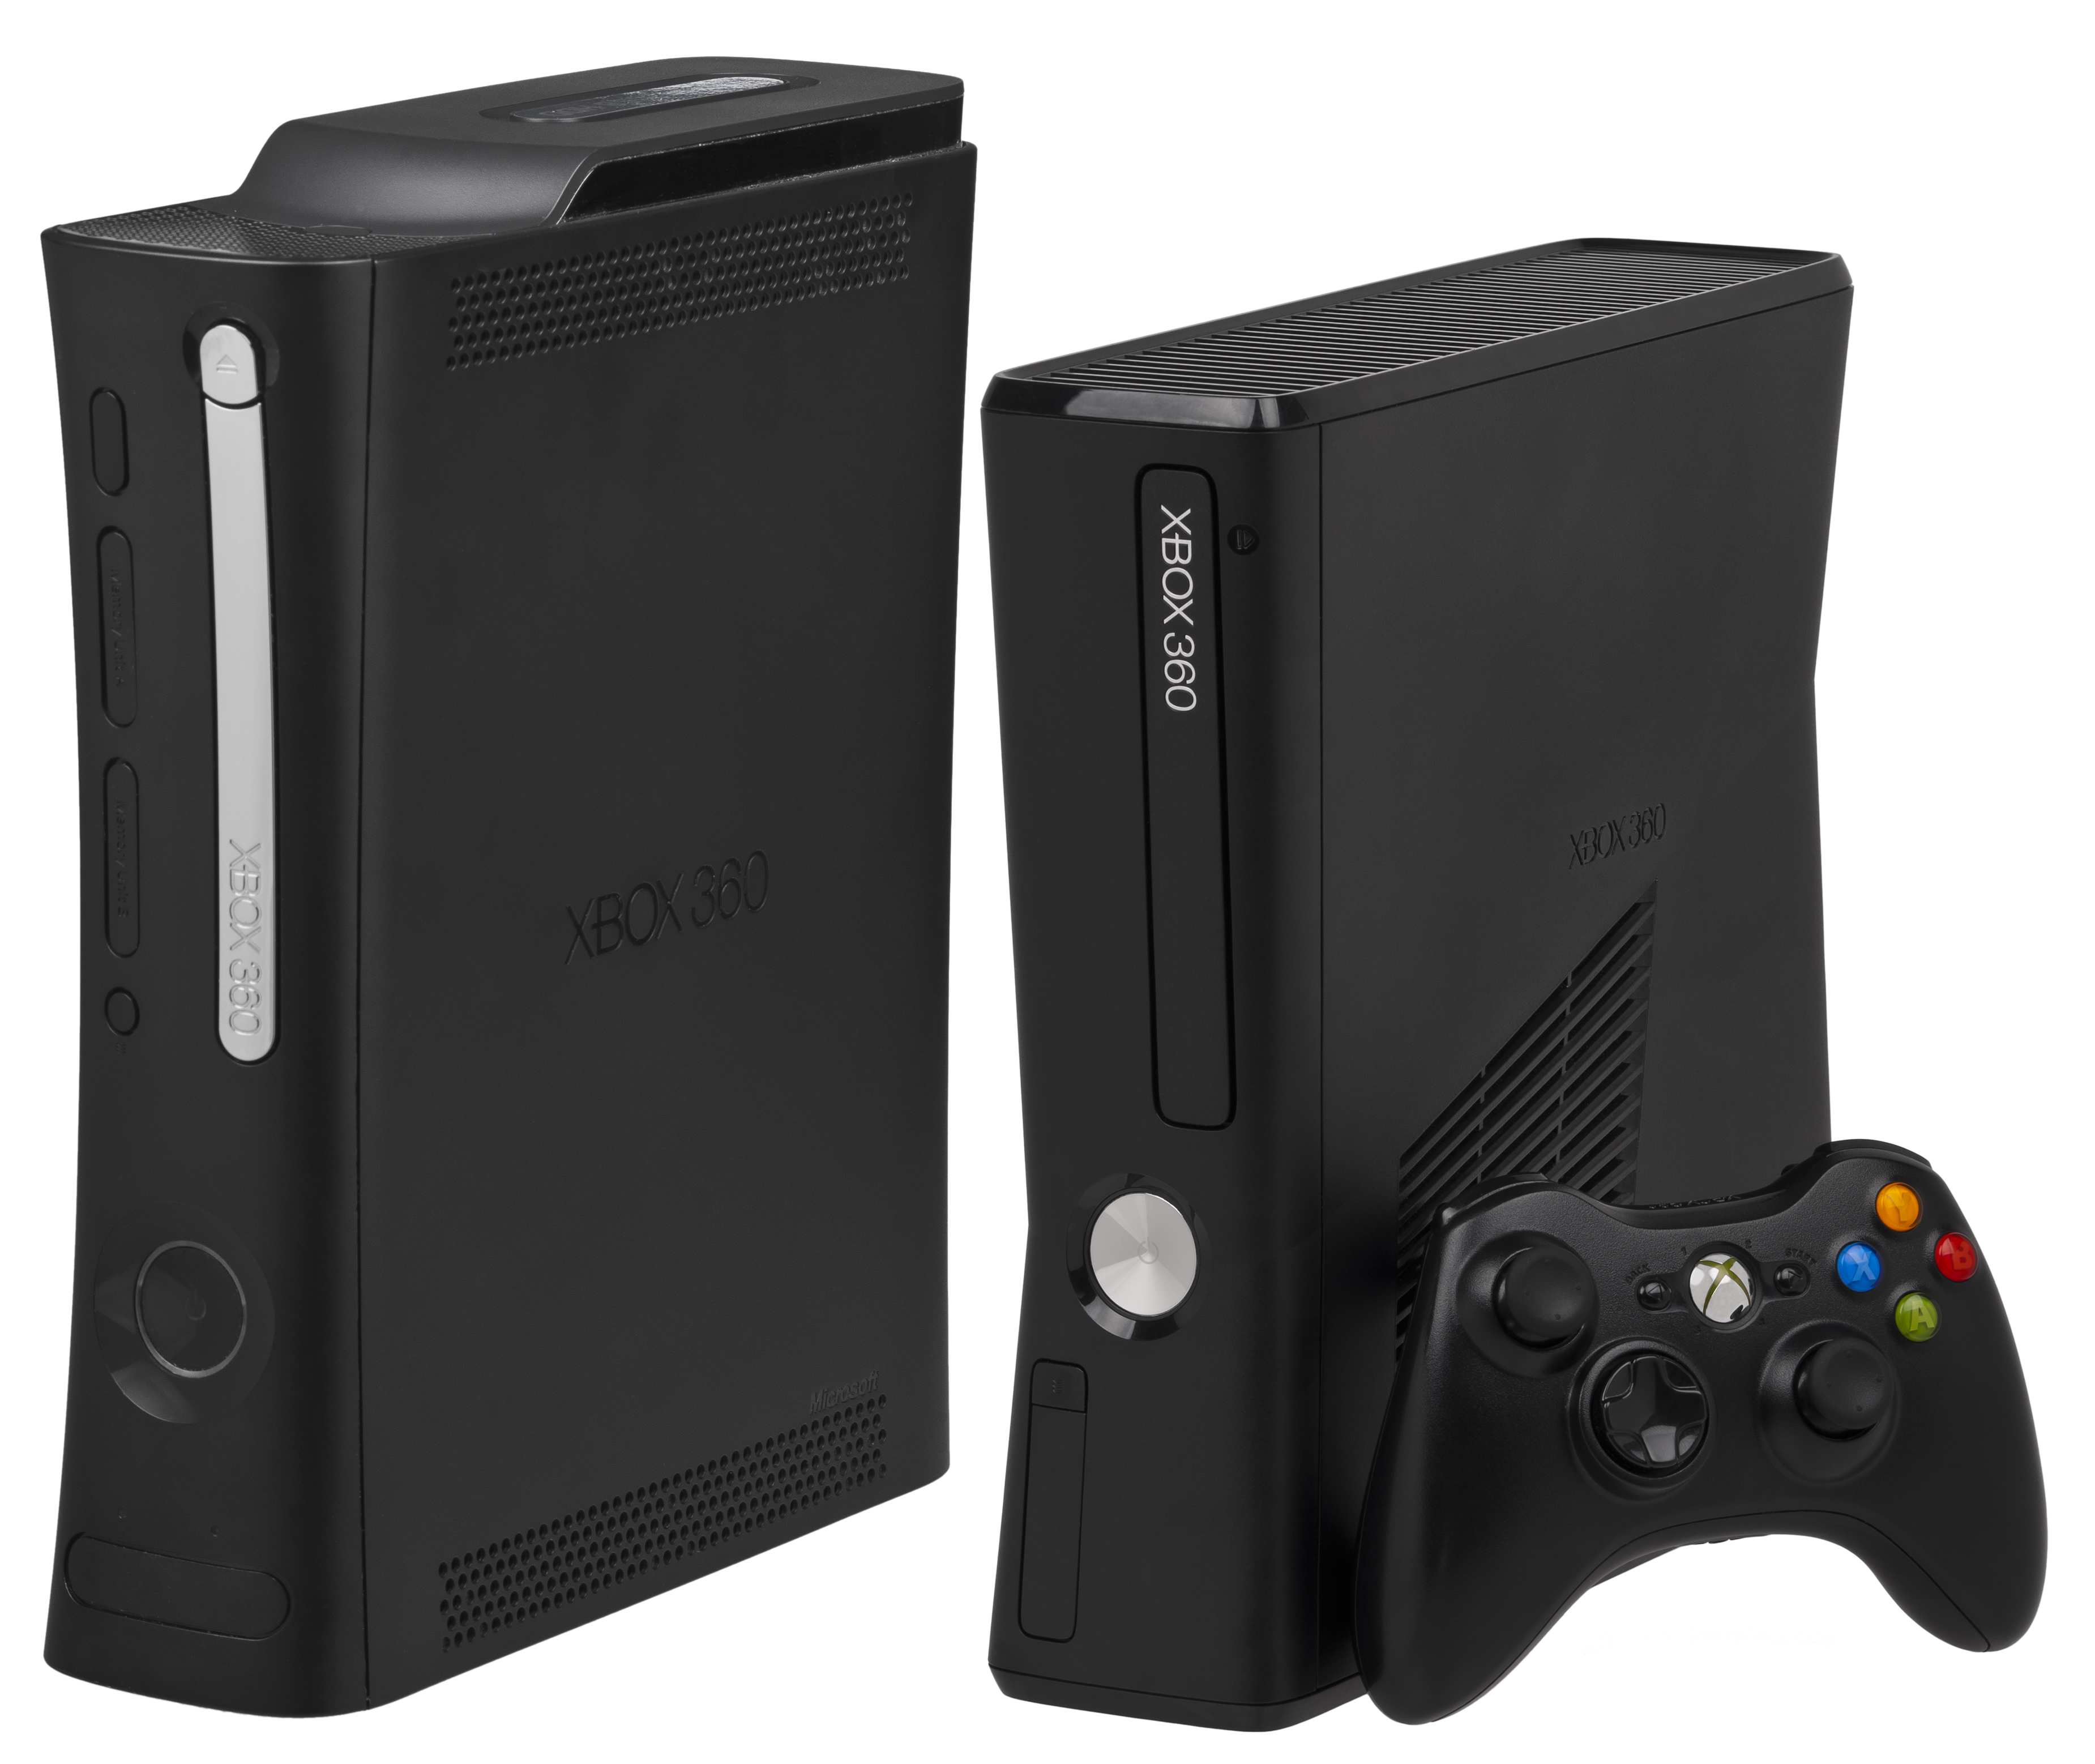 File:Xbox-360-Consoles-Infobo